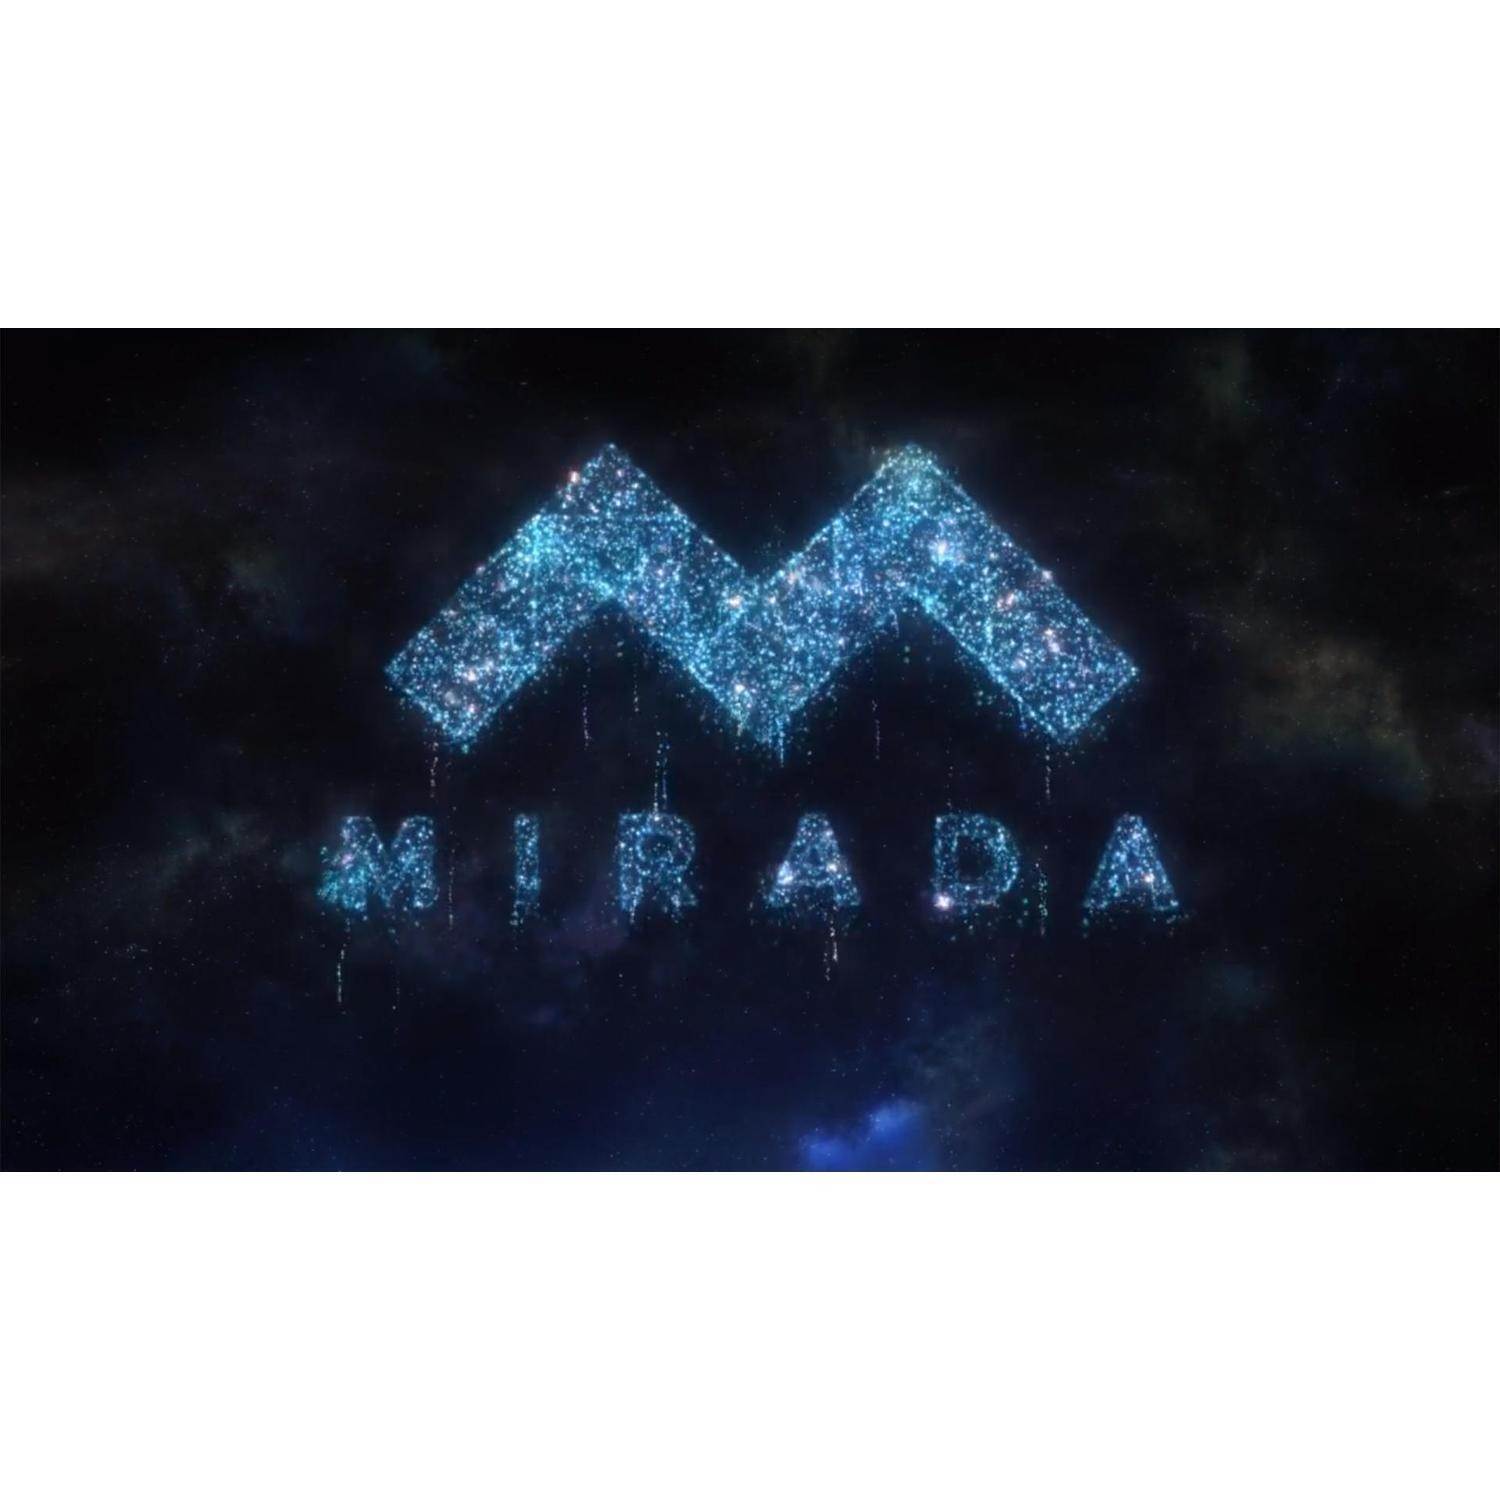 Mirada Exclusive Series建於 31126 State Rd 52, San Antonio, FL 33576